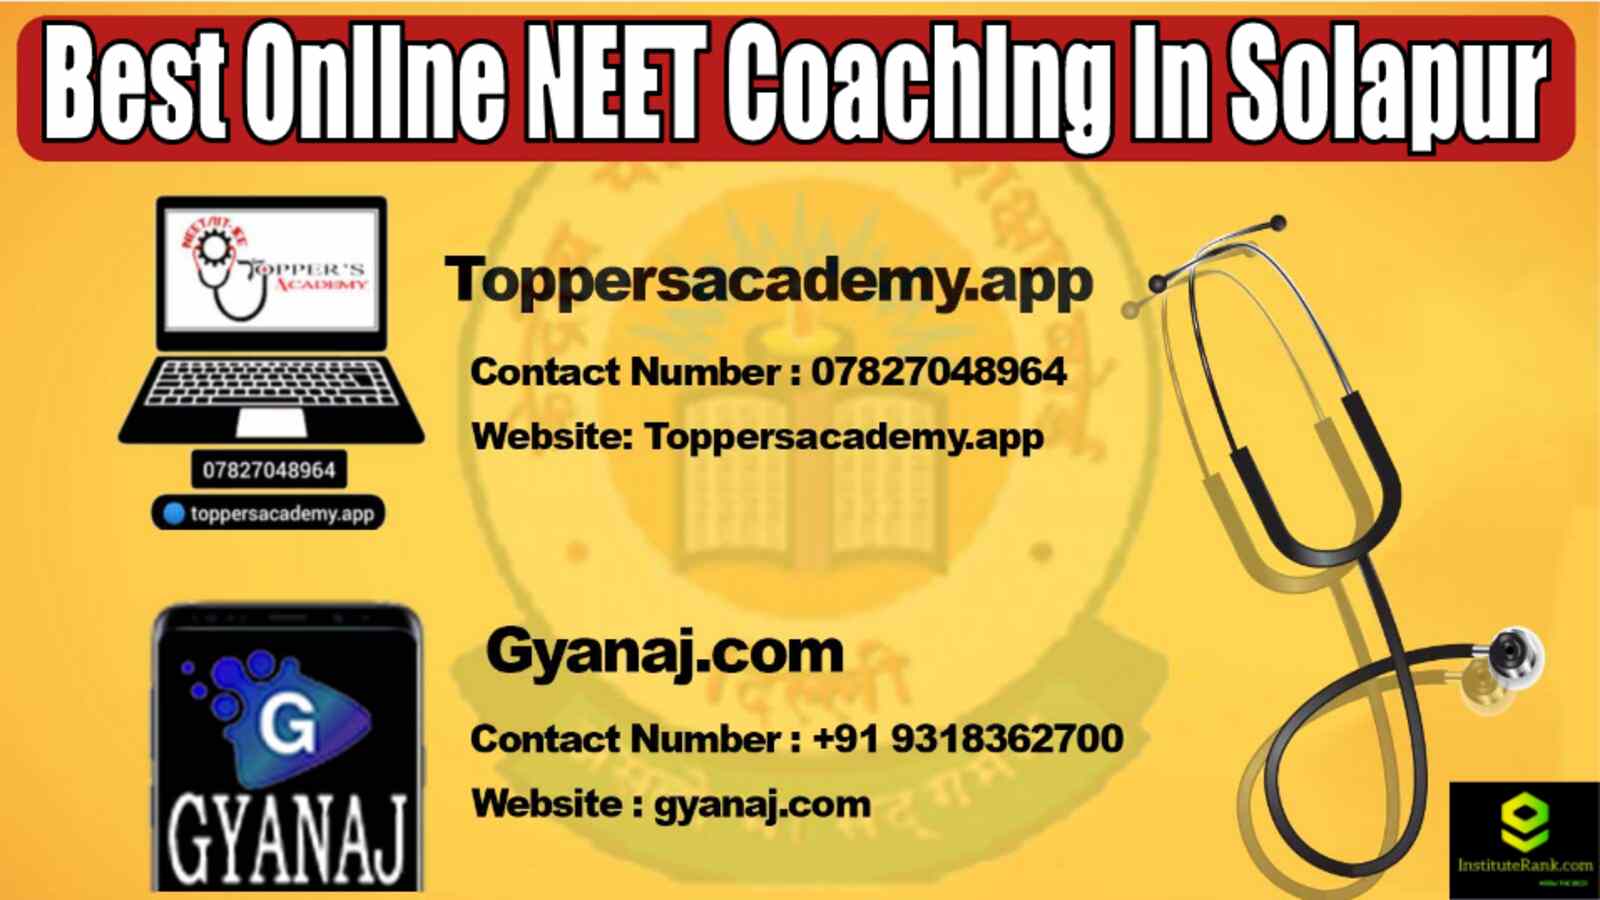 Best Online NEET Coaching in Solapur 2022